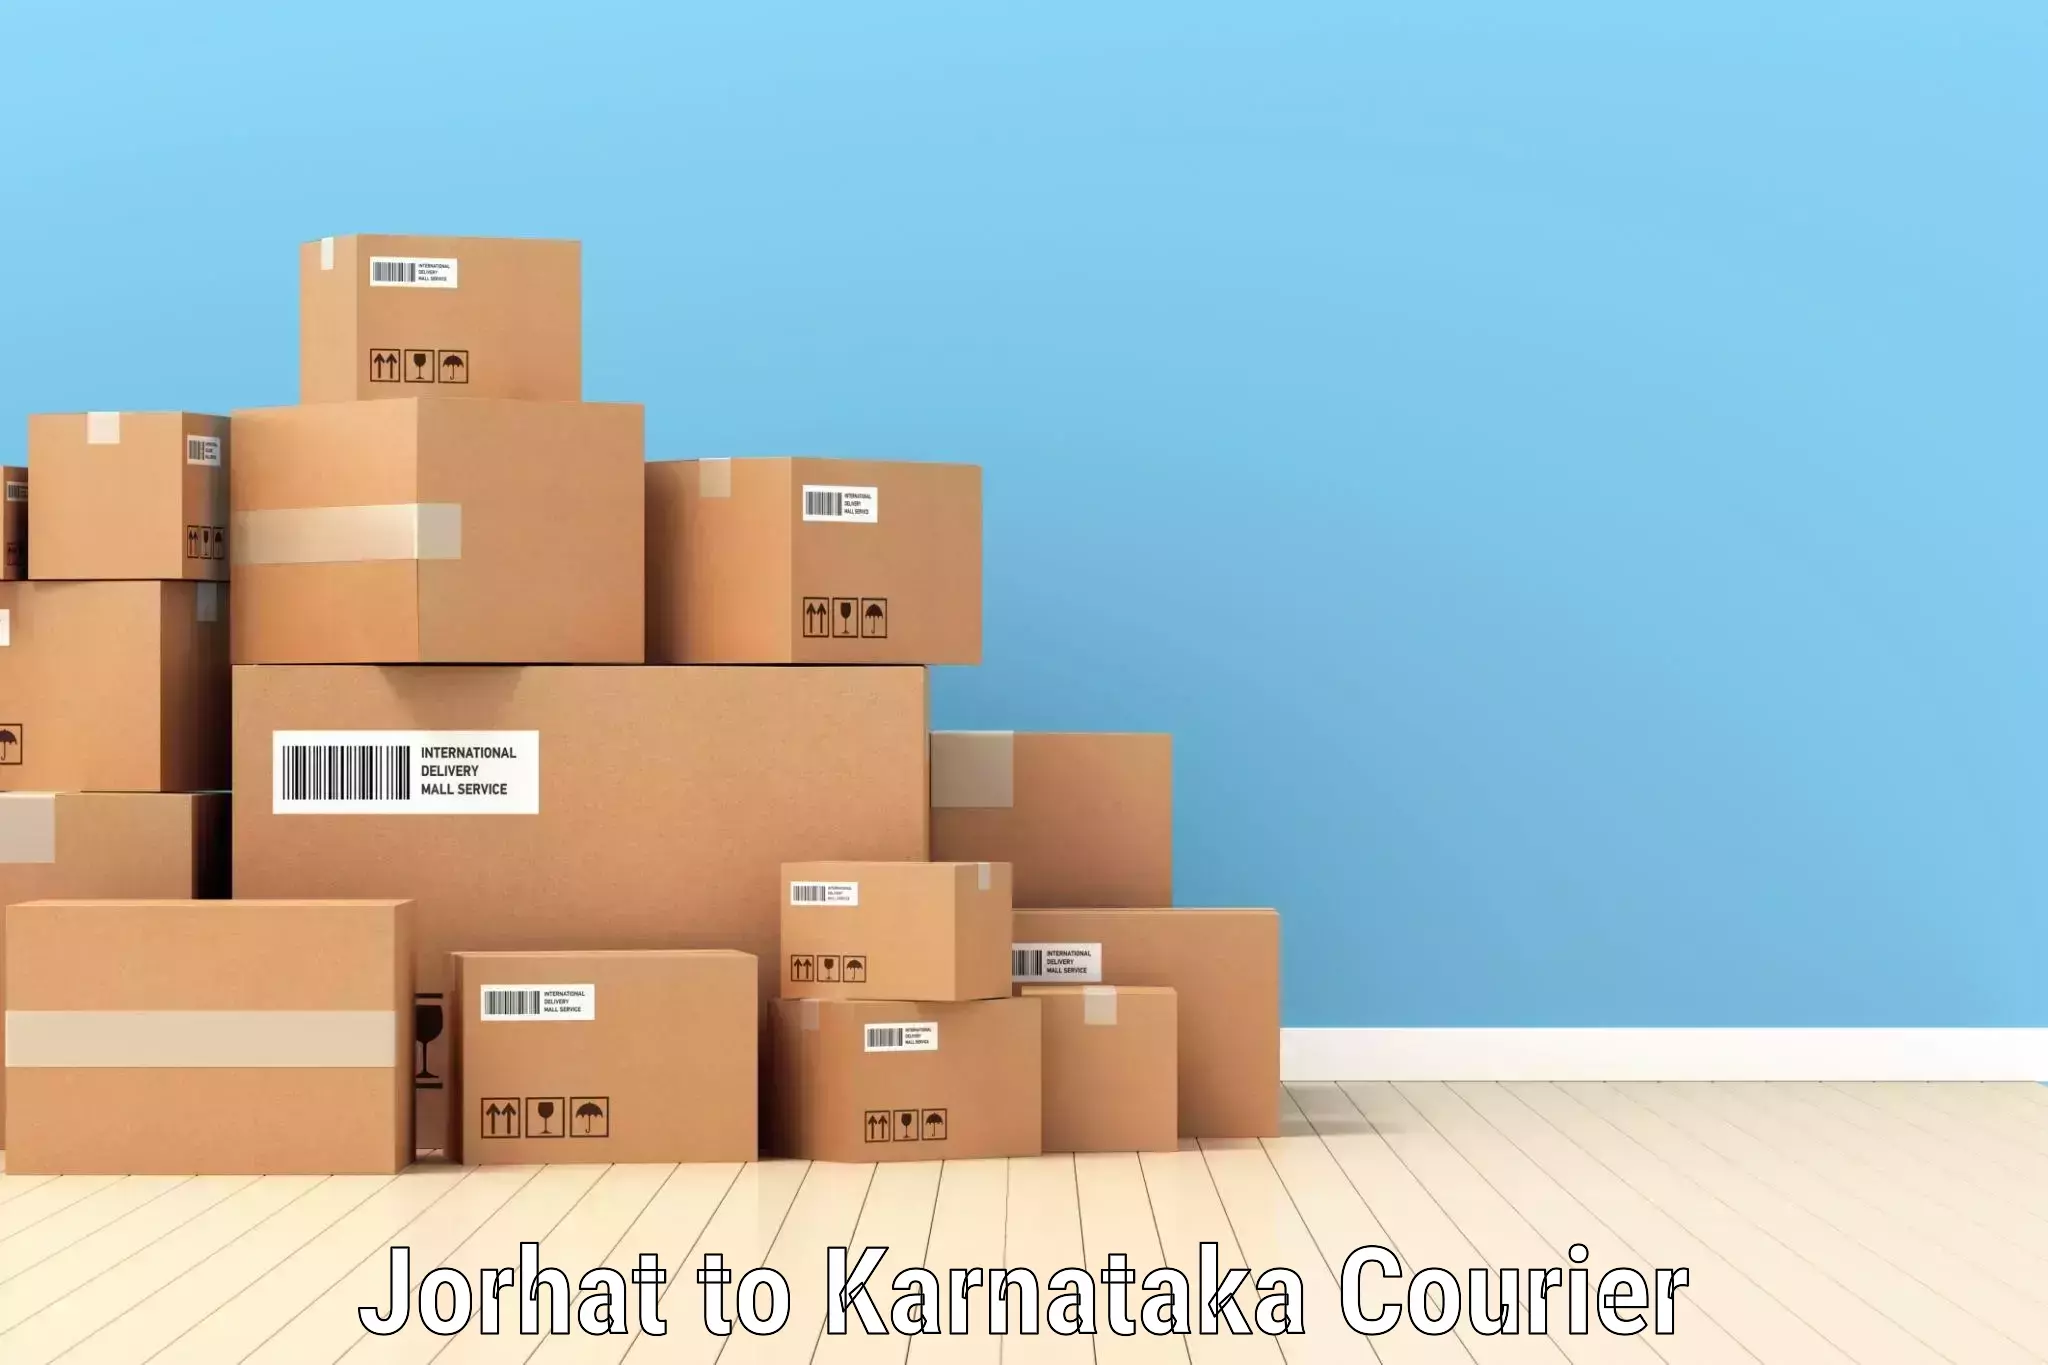 24-hour courier service Jorhat to Mangalore Port